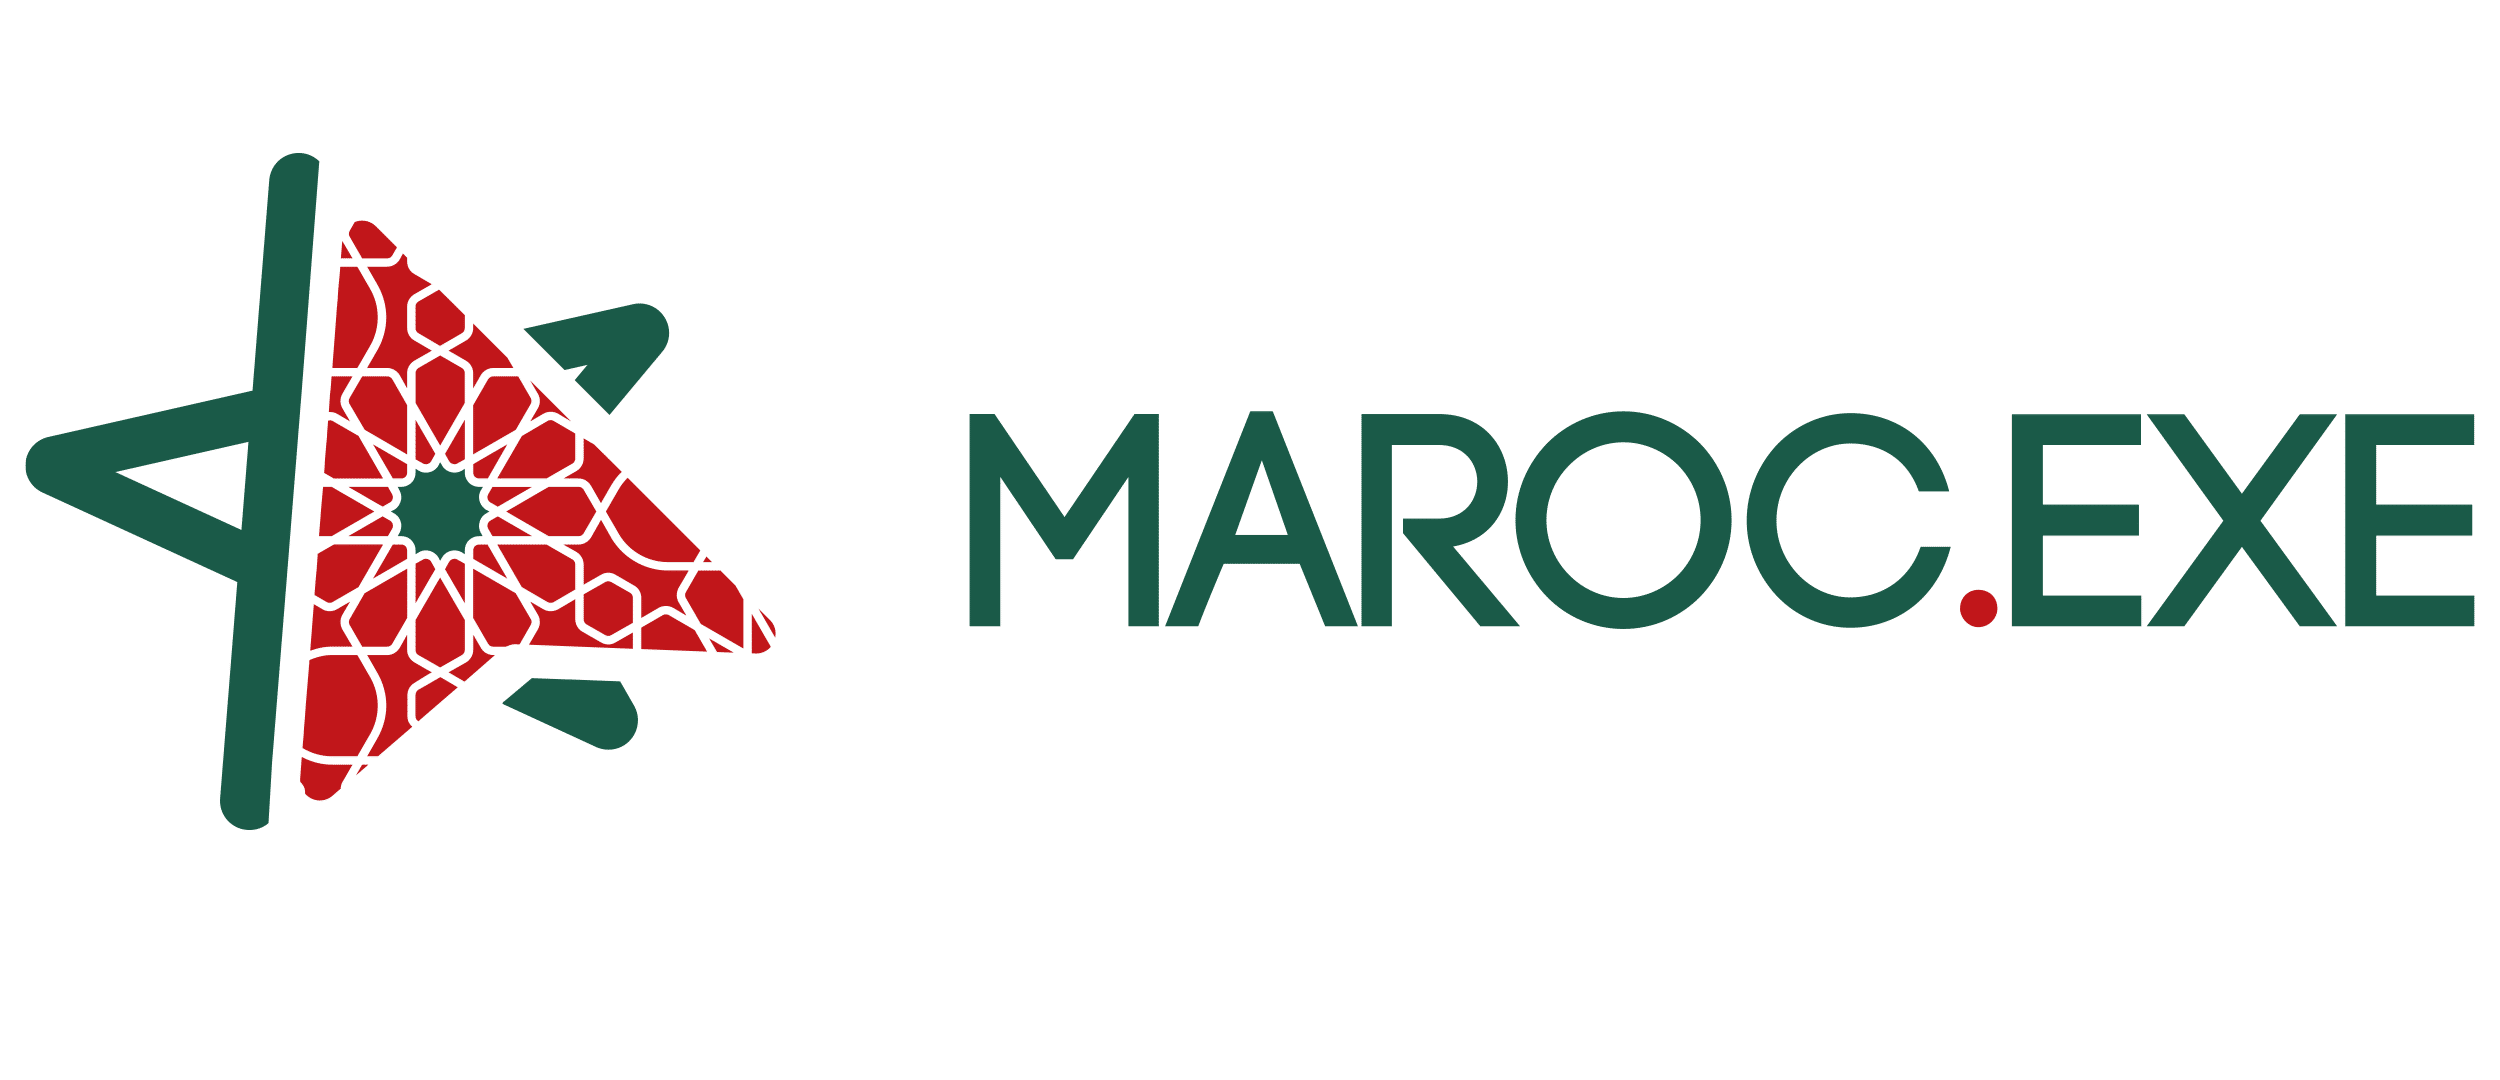 Marocexe Full Logo